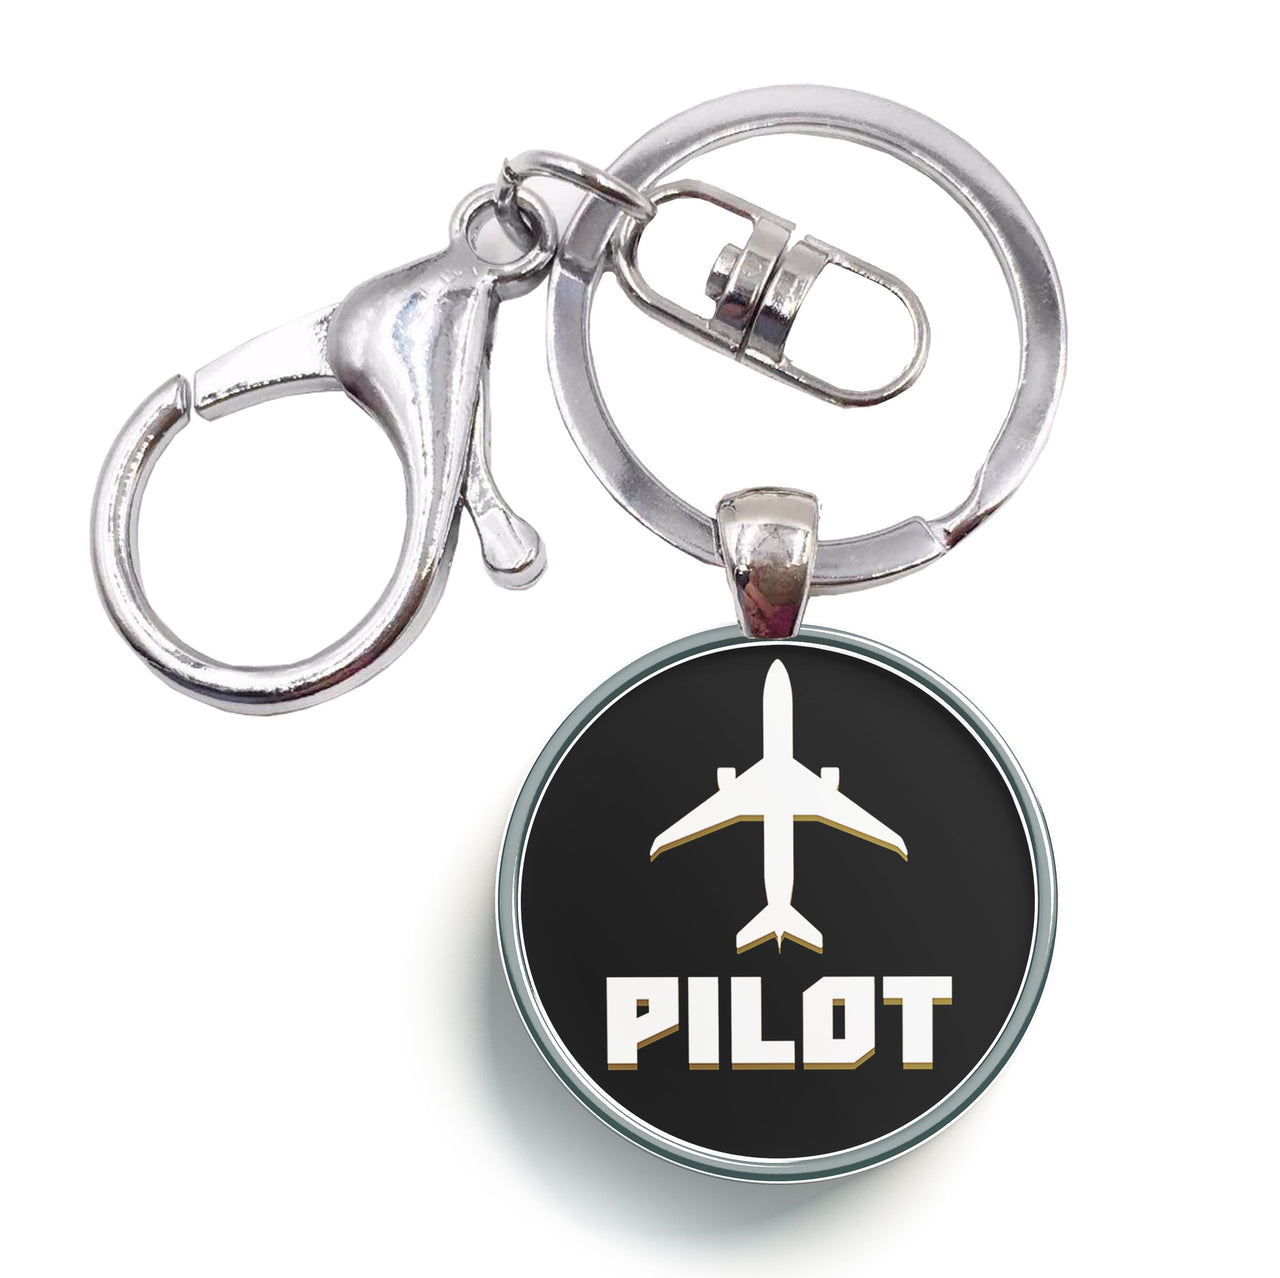 Pilot & Circle Designed Circle Key Chains